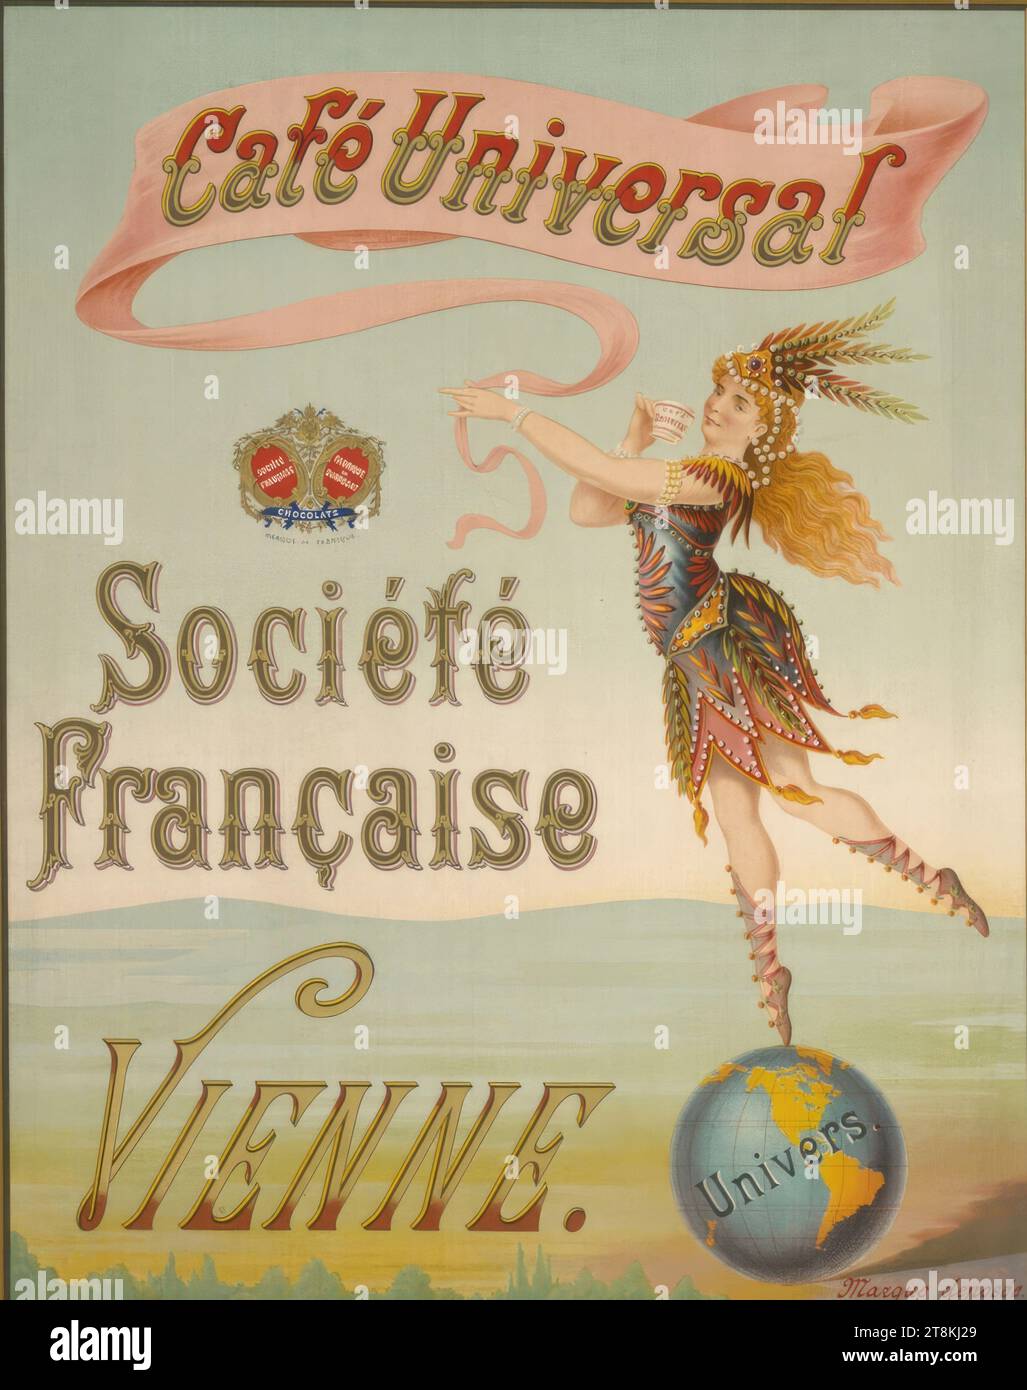 Café Universal; Société Francaise, VIENNE., Anonymous, intorno al 1900, stampa, litografia a colori, foglio: 565 mm x 450 mm Foto Stock